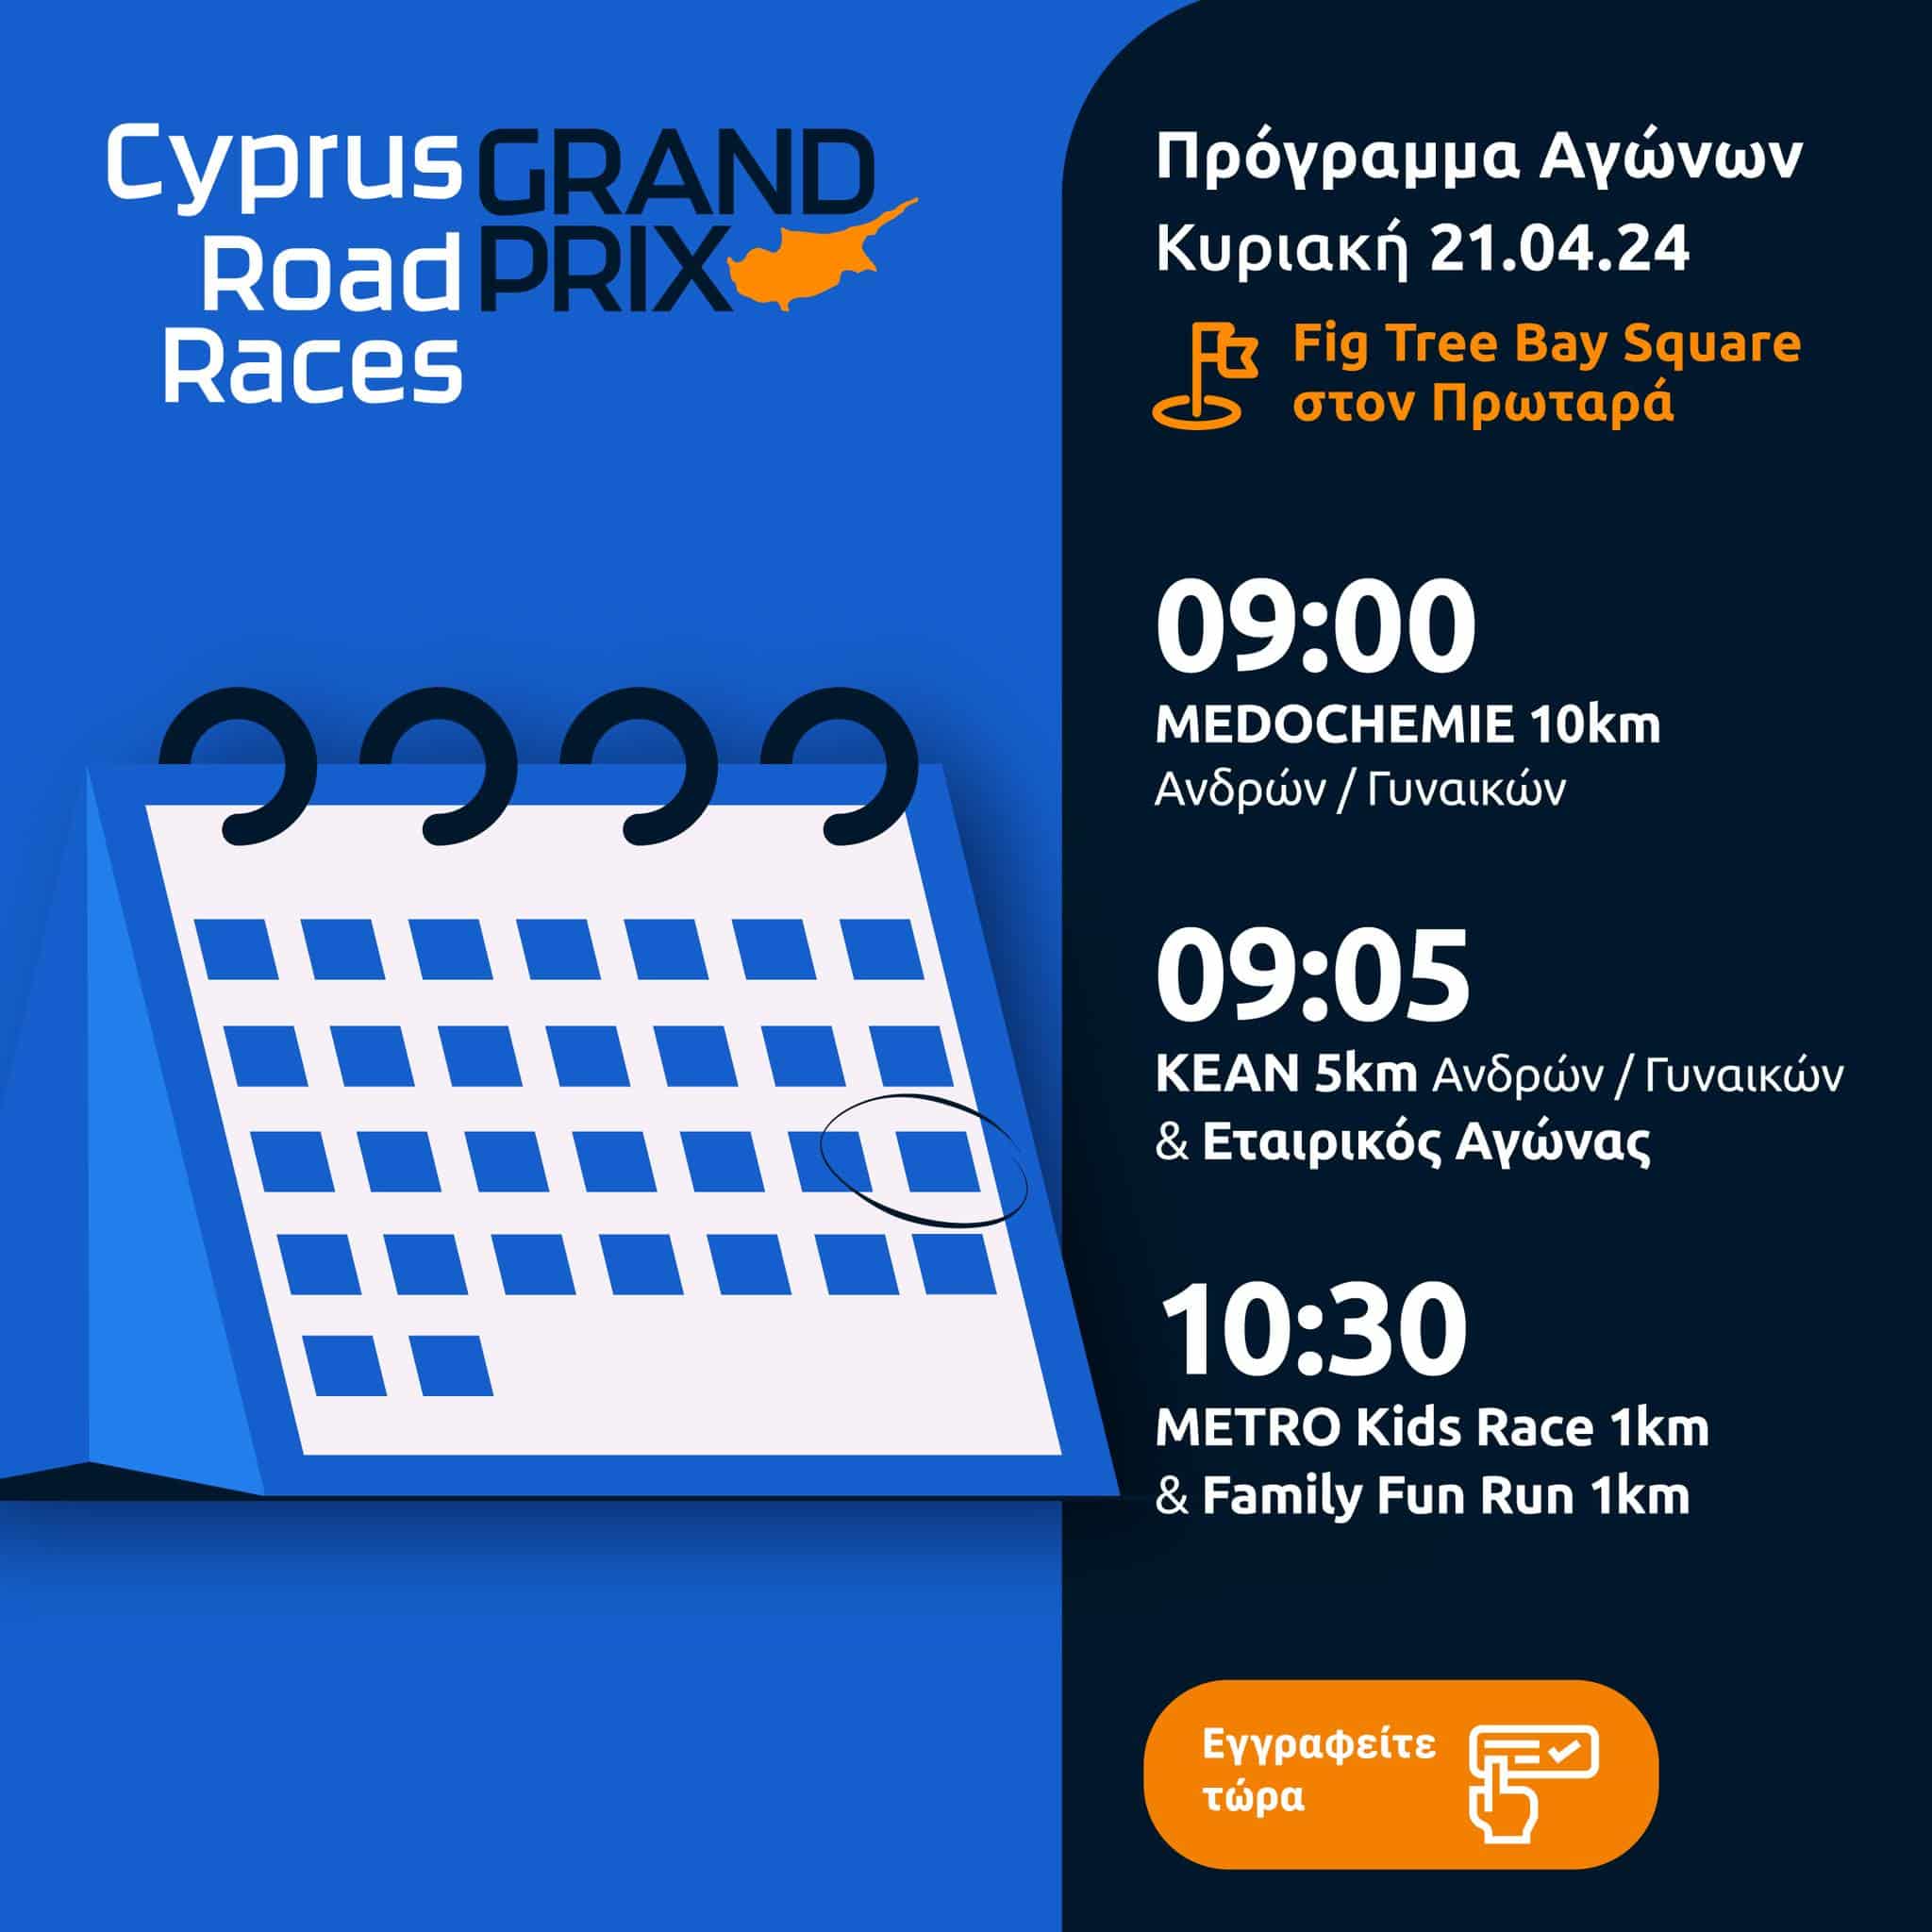 437391692 819278633568632 231446910547210210 n Cyprus Road Races Grand Prix, exclusive, road race, Protaras